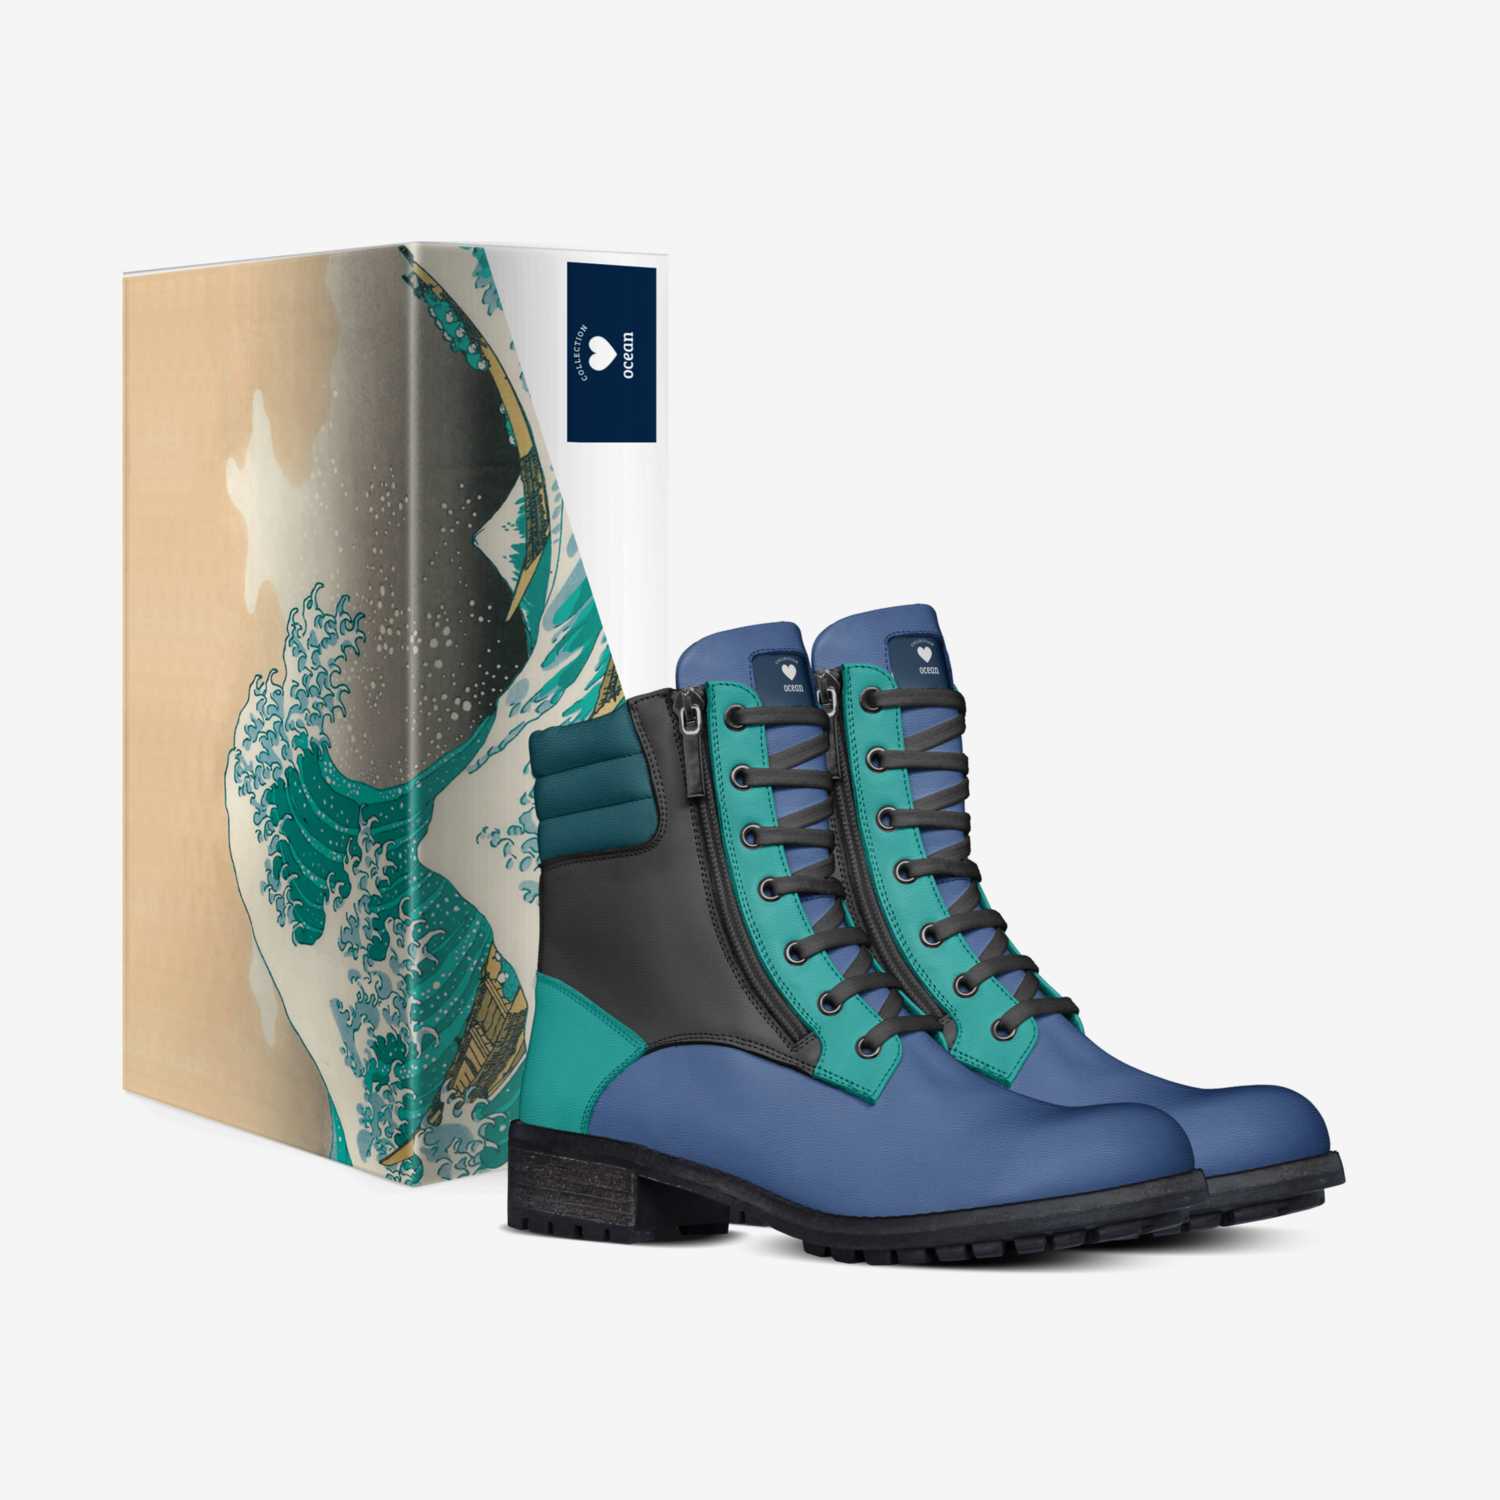 ocean custom made in Italy shoes by Elsa Meenach | Box view